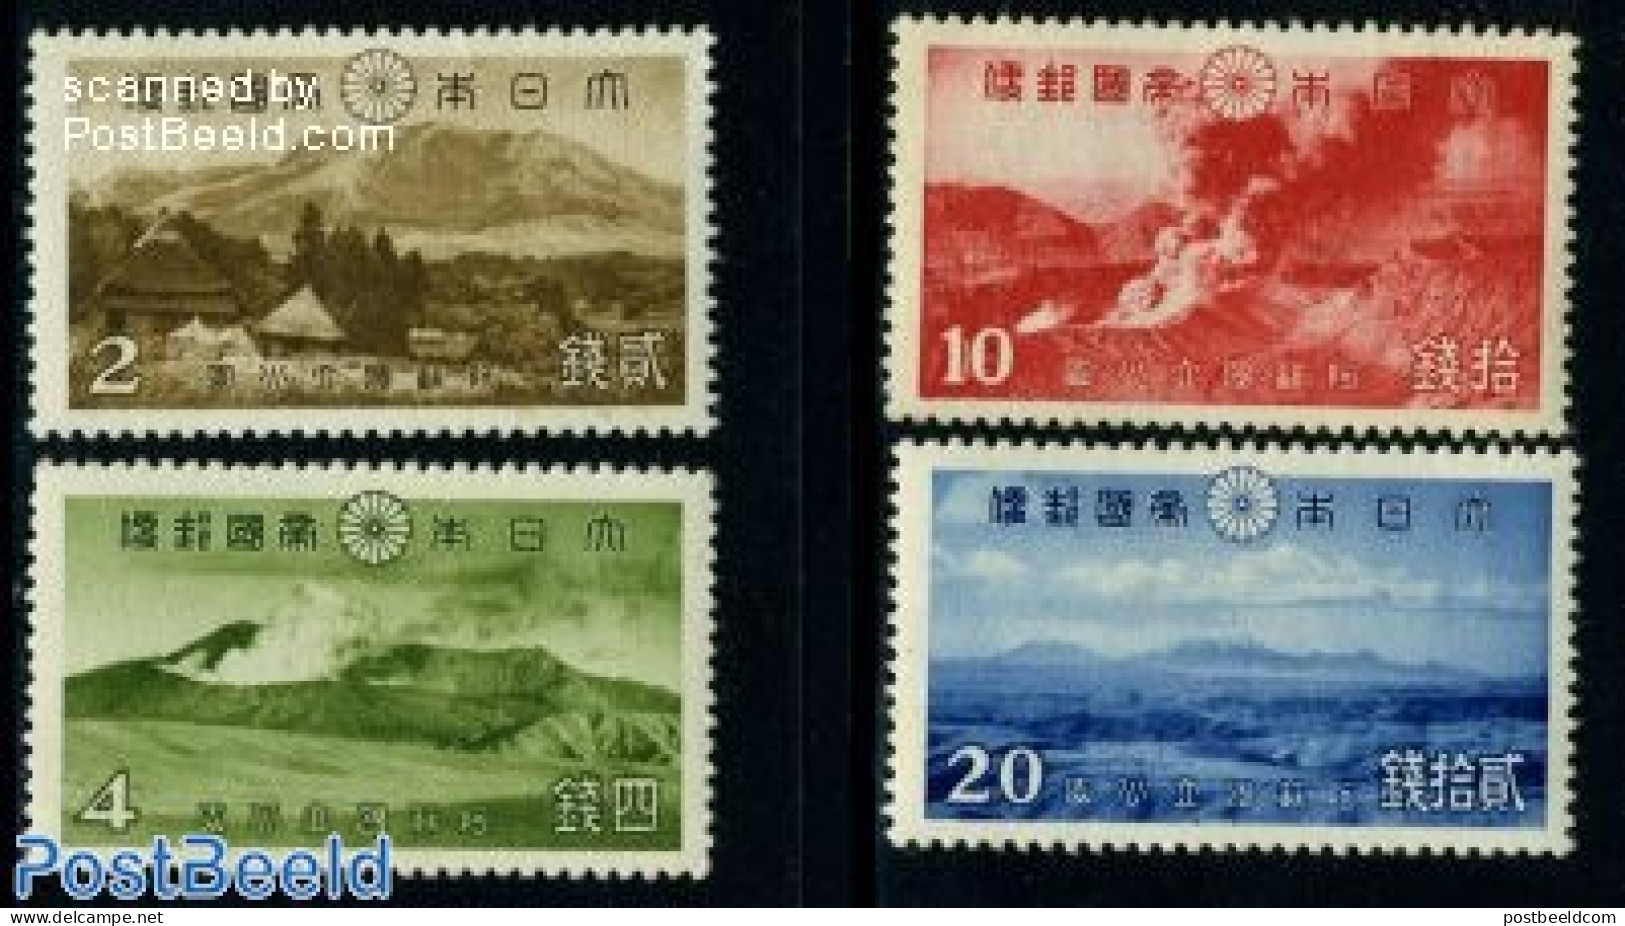 Japan 1939 Landscapes 4v, Mint NH - Neufs